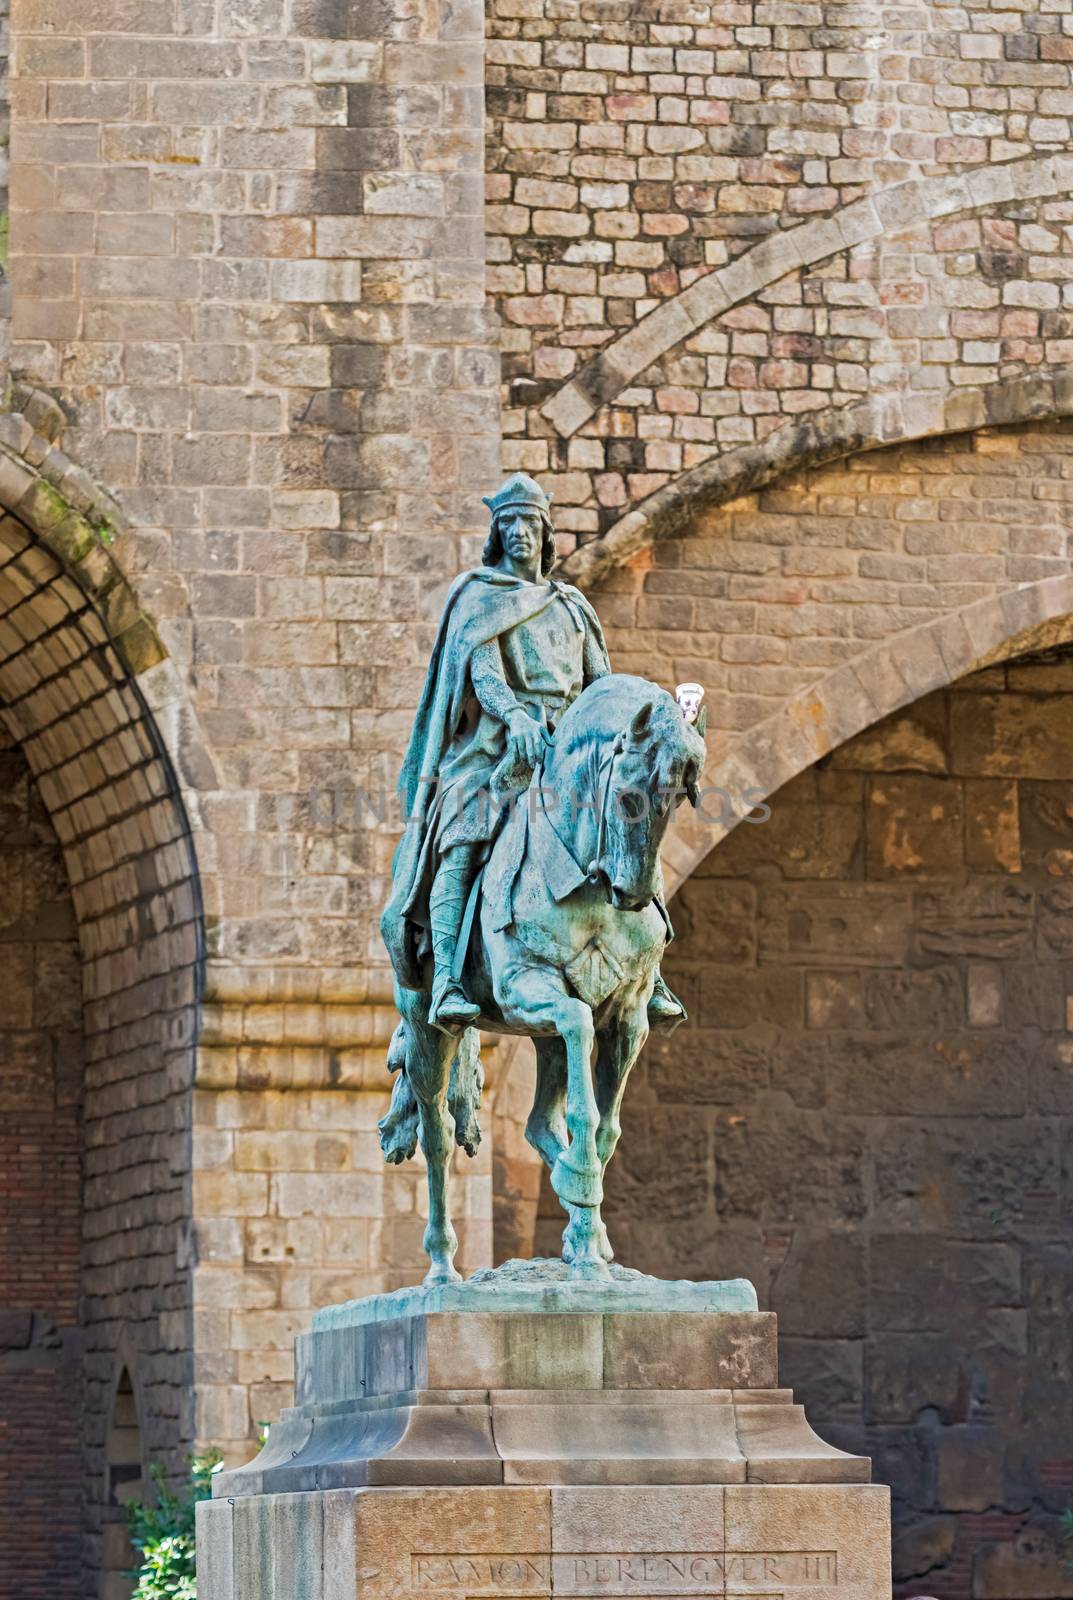 Monument of Ramon Berenguer III, Count of Barcelona by Marcus